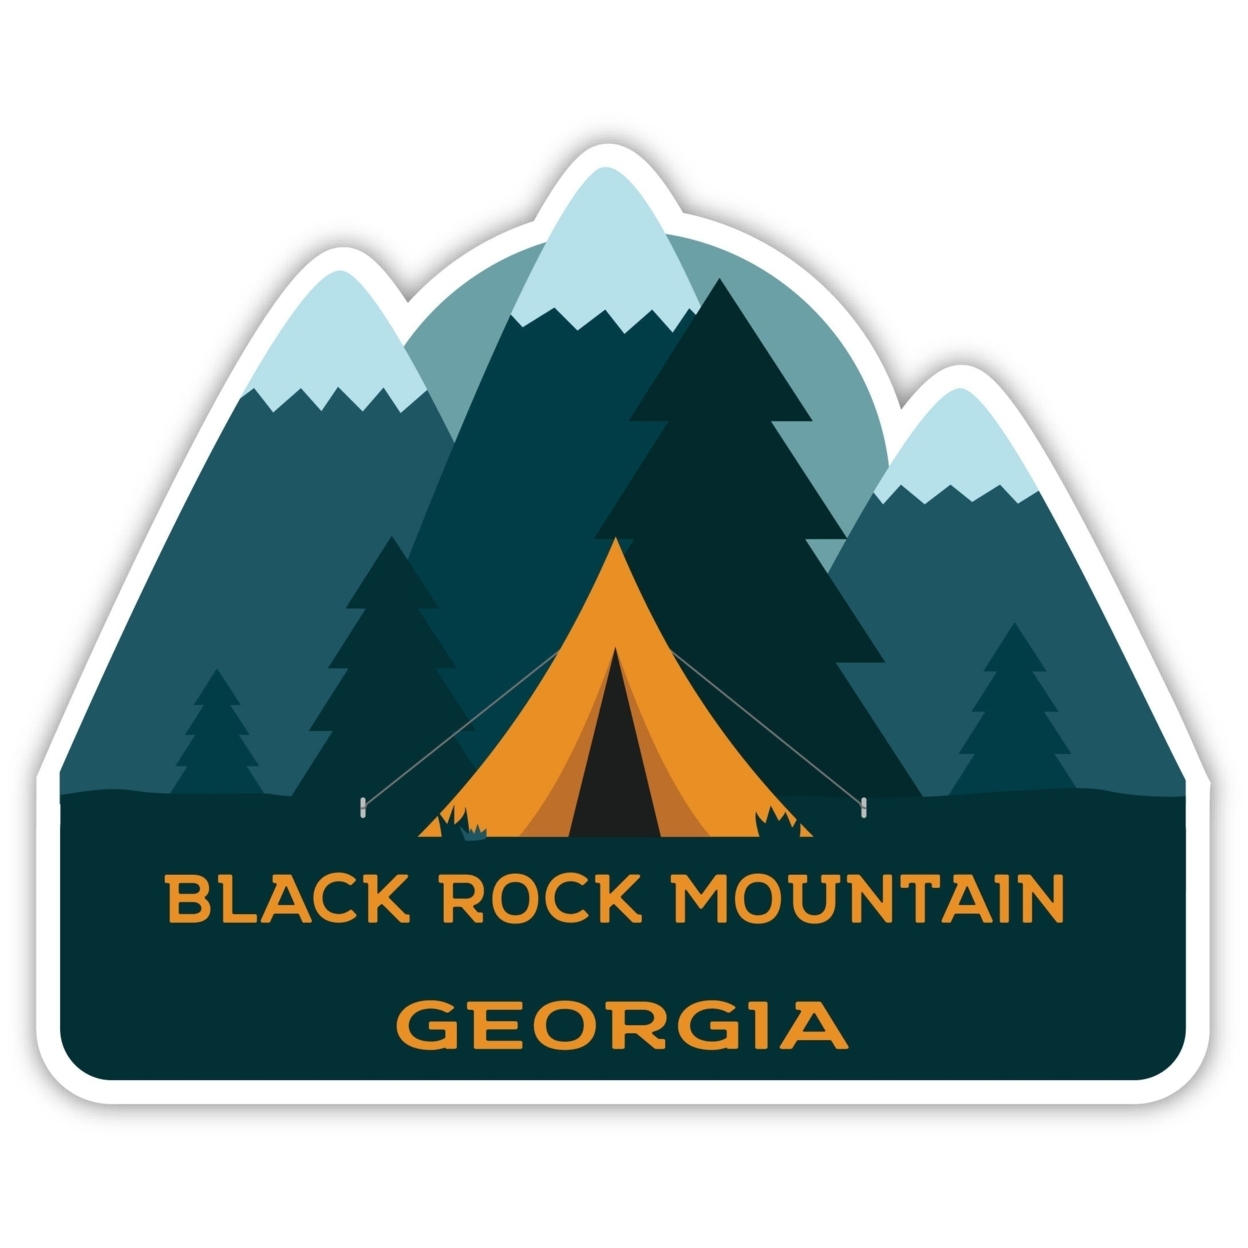 Black Rock Mountain Georgia Souvenir Decorative Stickers (Choose Theme And Size) - Single Unit, 4-Inch, Tent